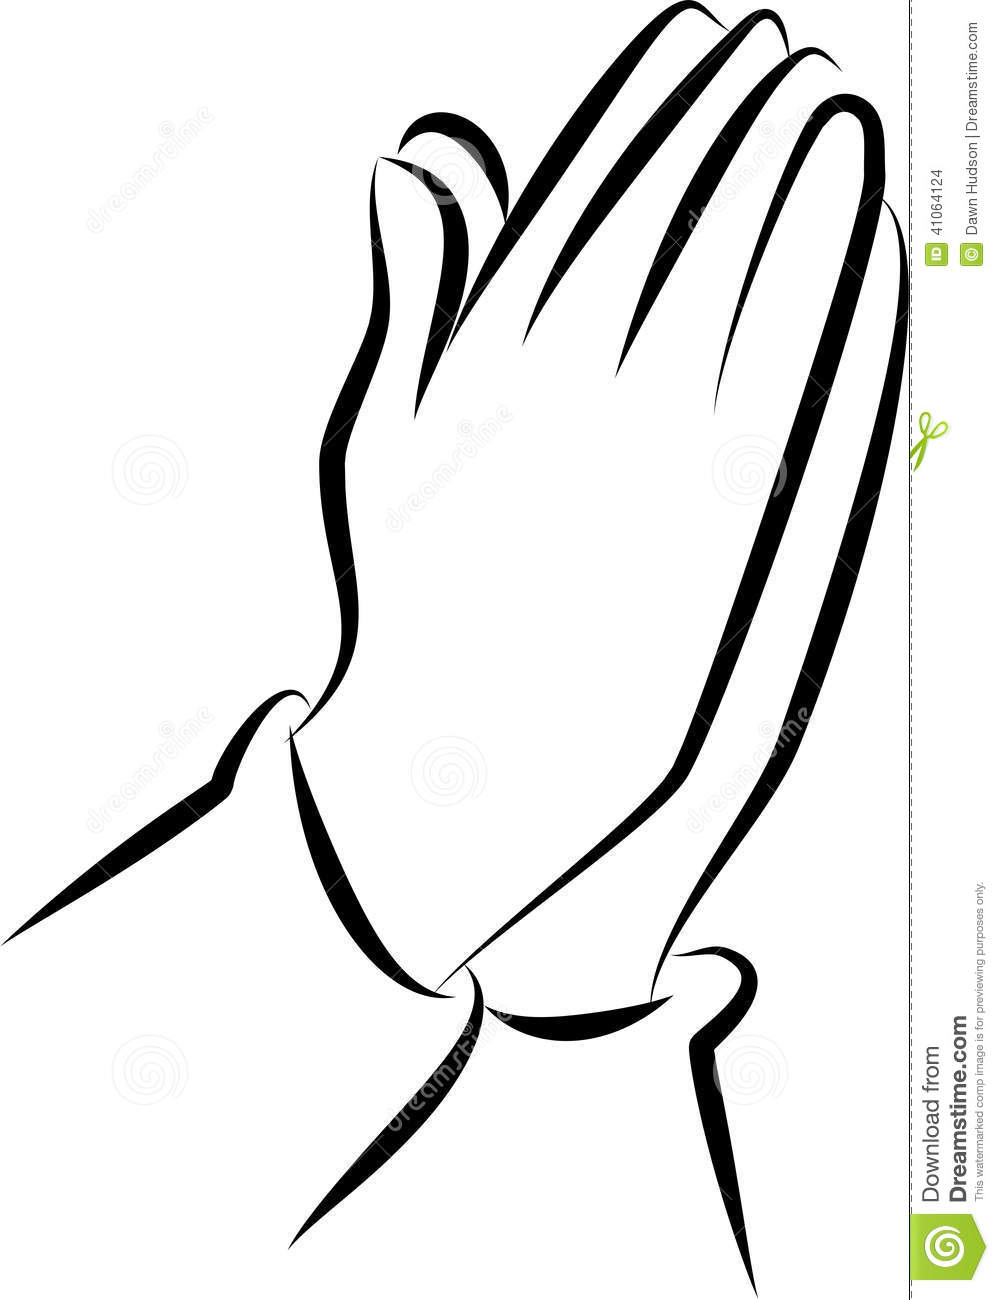 Praying hands clip art free P